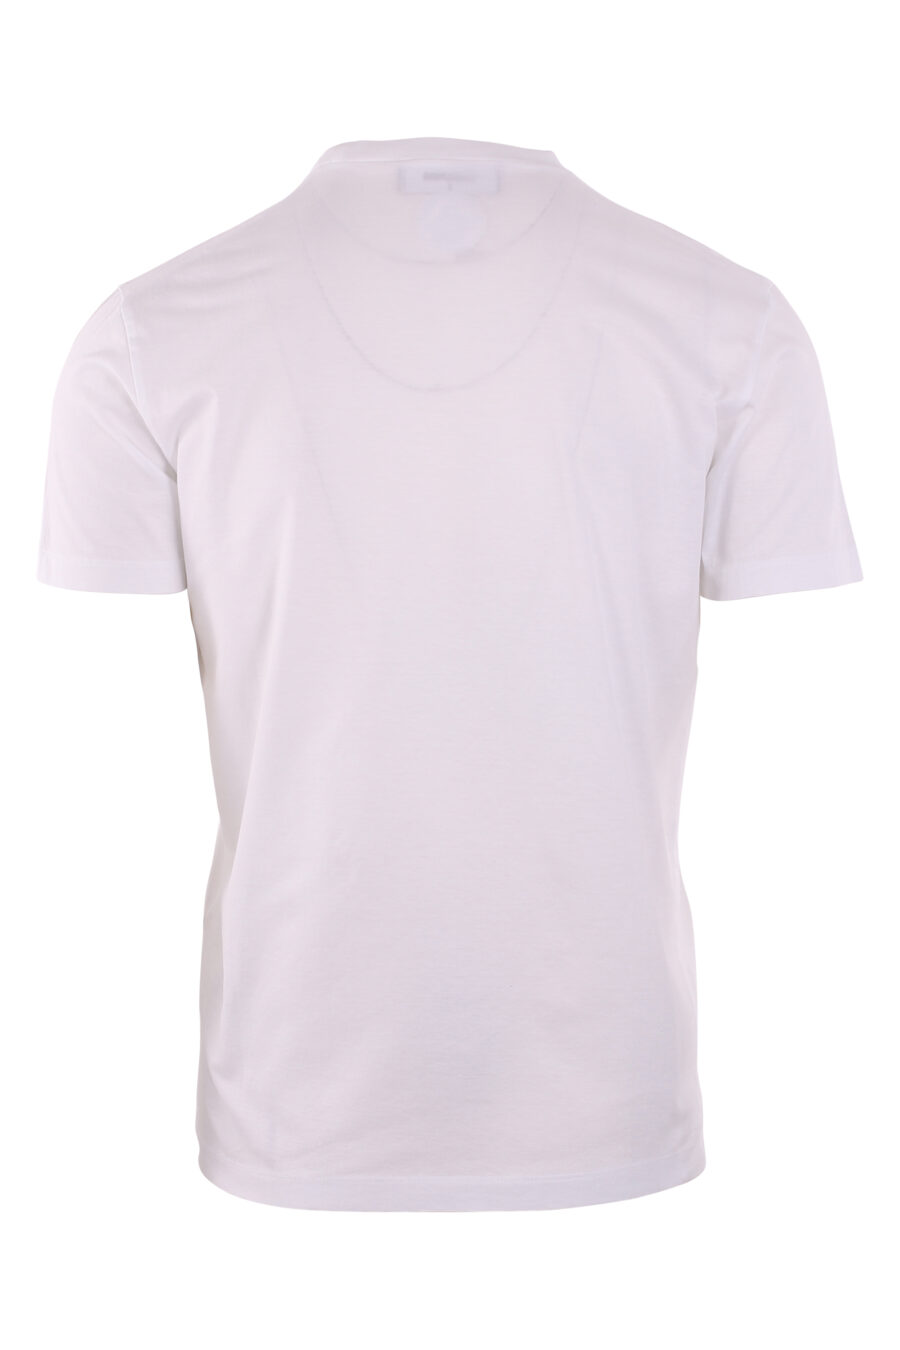 Camiseta blanca con logo "icon splash" - IMG 2911